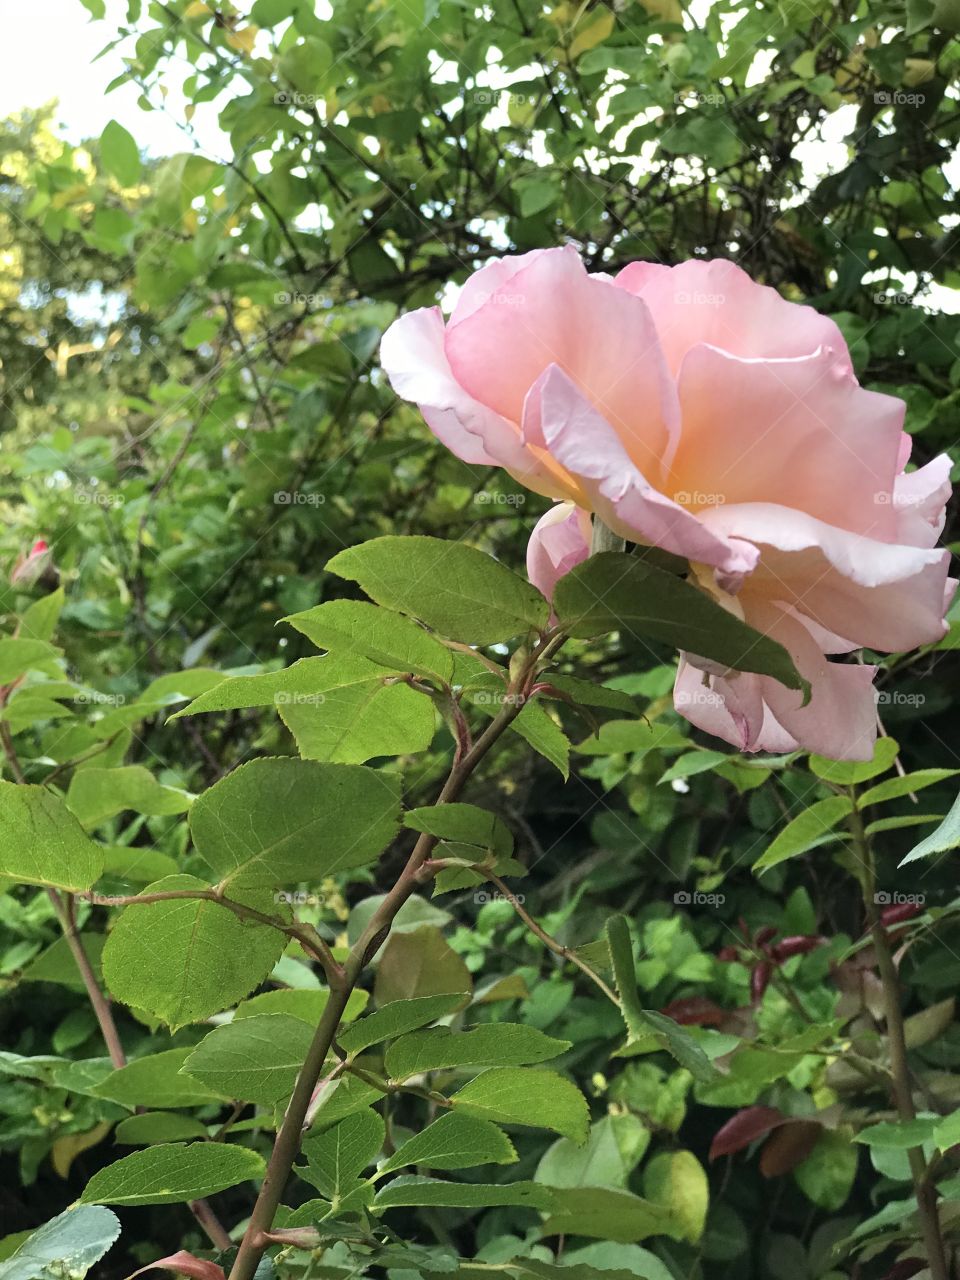 Beautiful Rose in my garden 